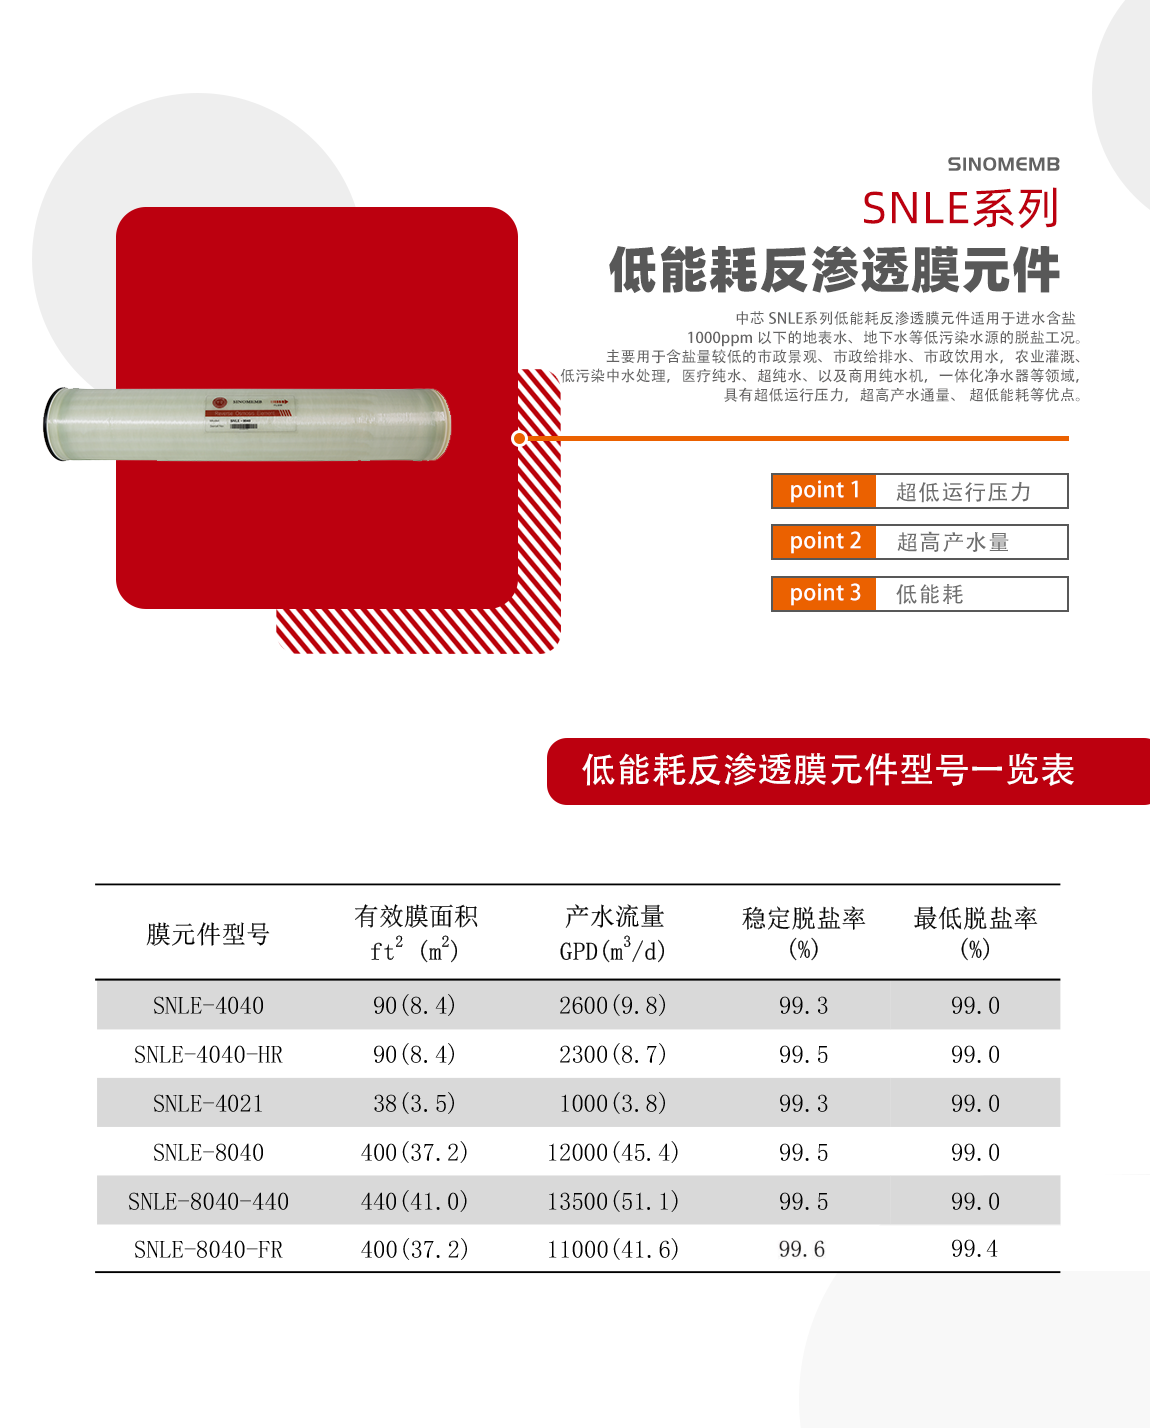 3.SNLE低能耗反渗透膜元件.png